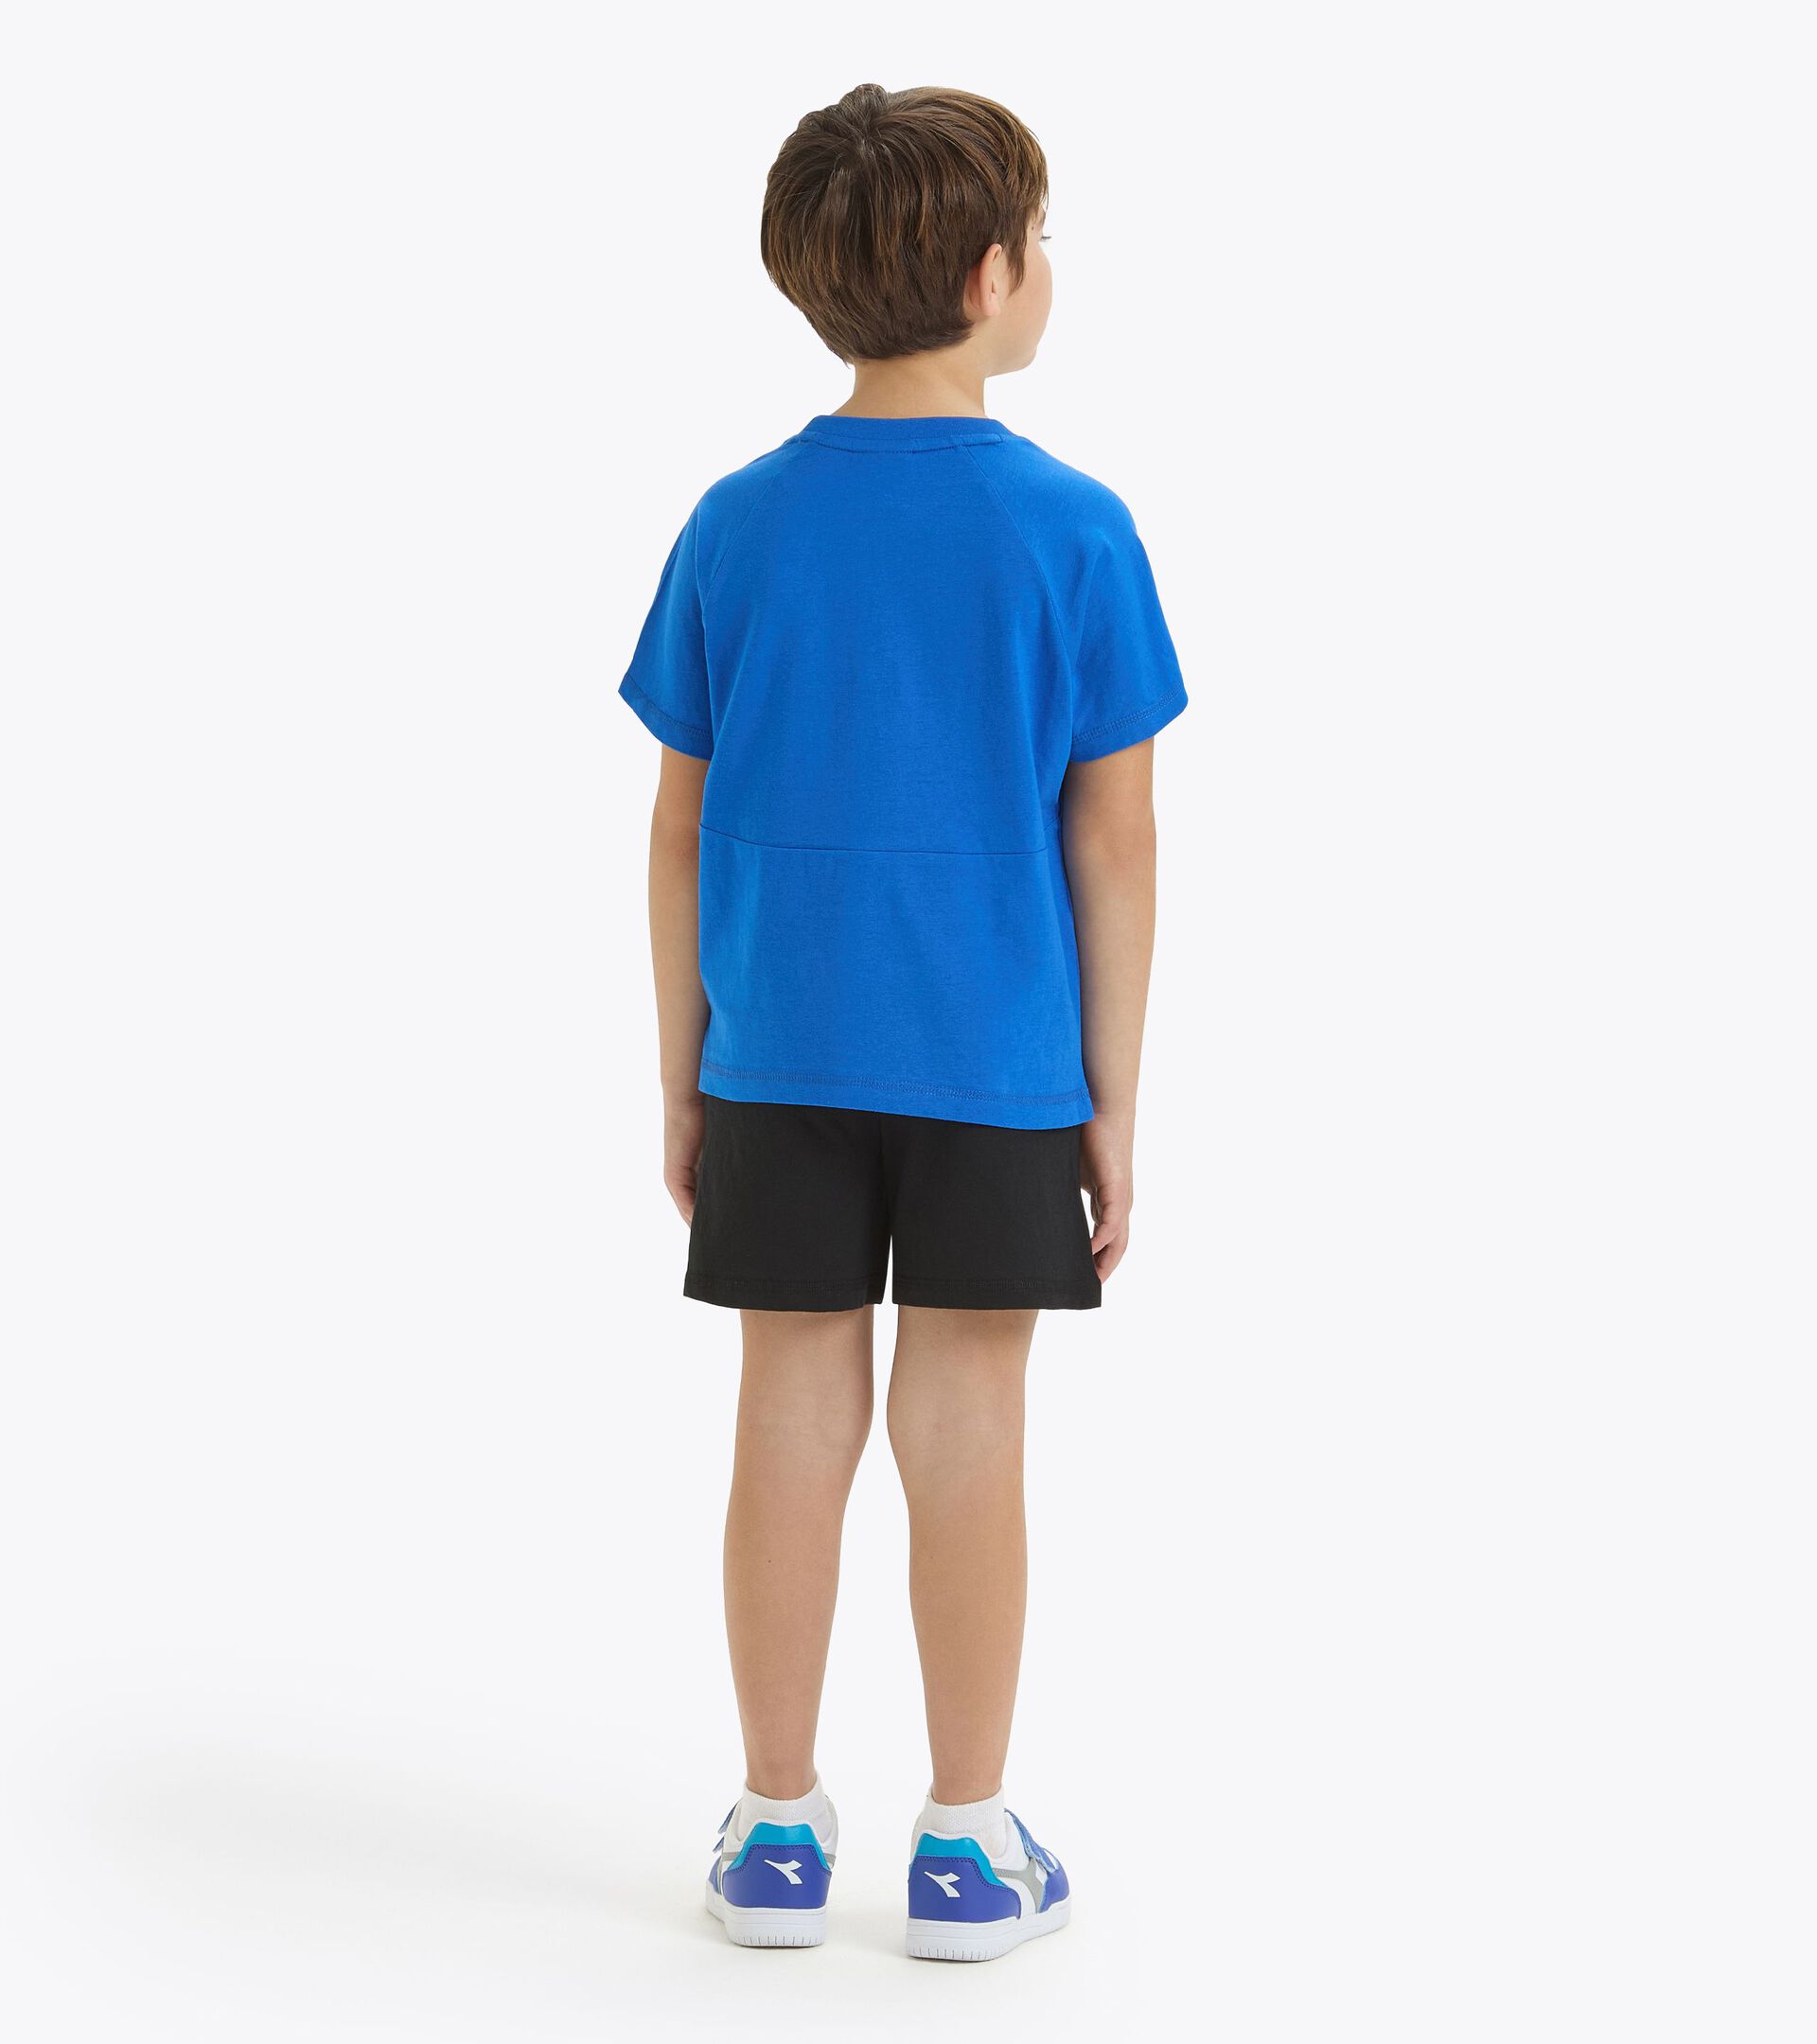 Sports set - T-shirt and shorts - Boy
 JB. SET SS RIDDLE PRINCESS BLUE - Diadora